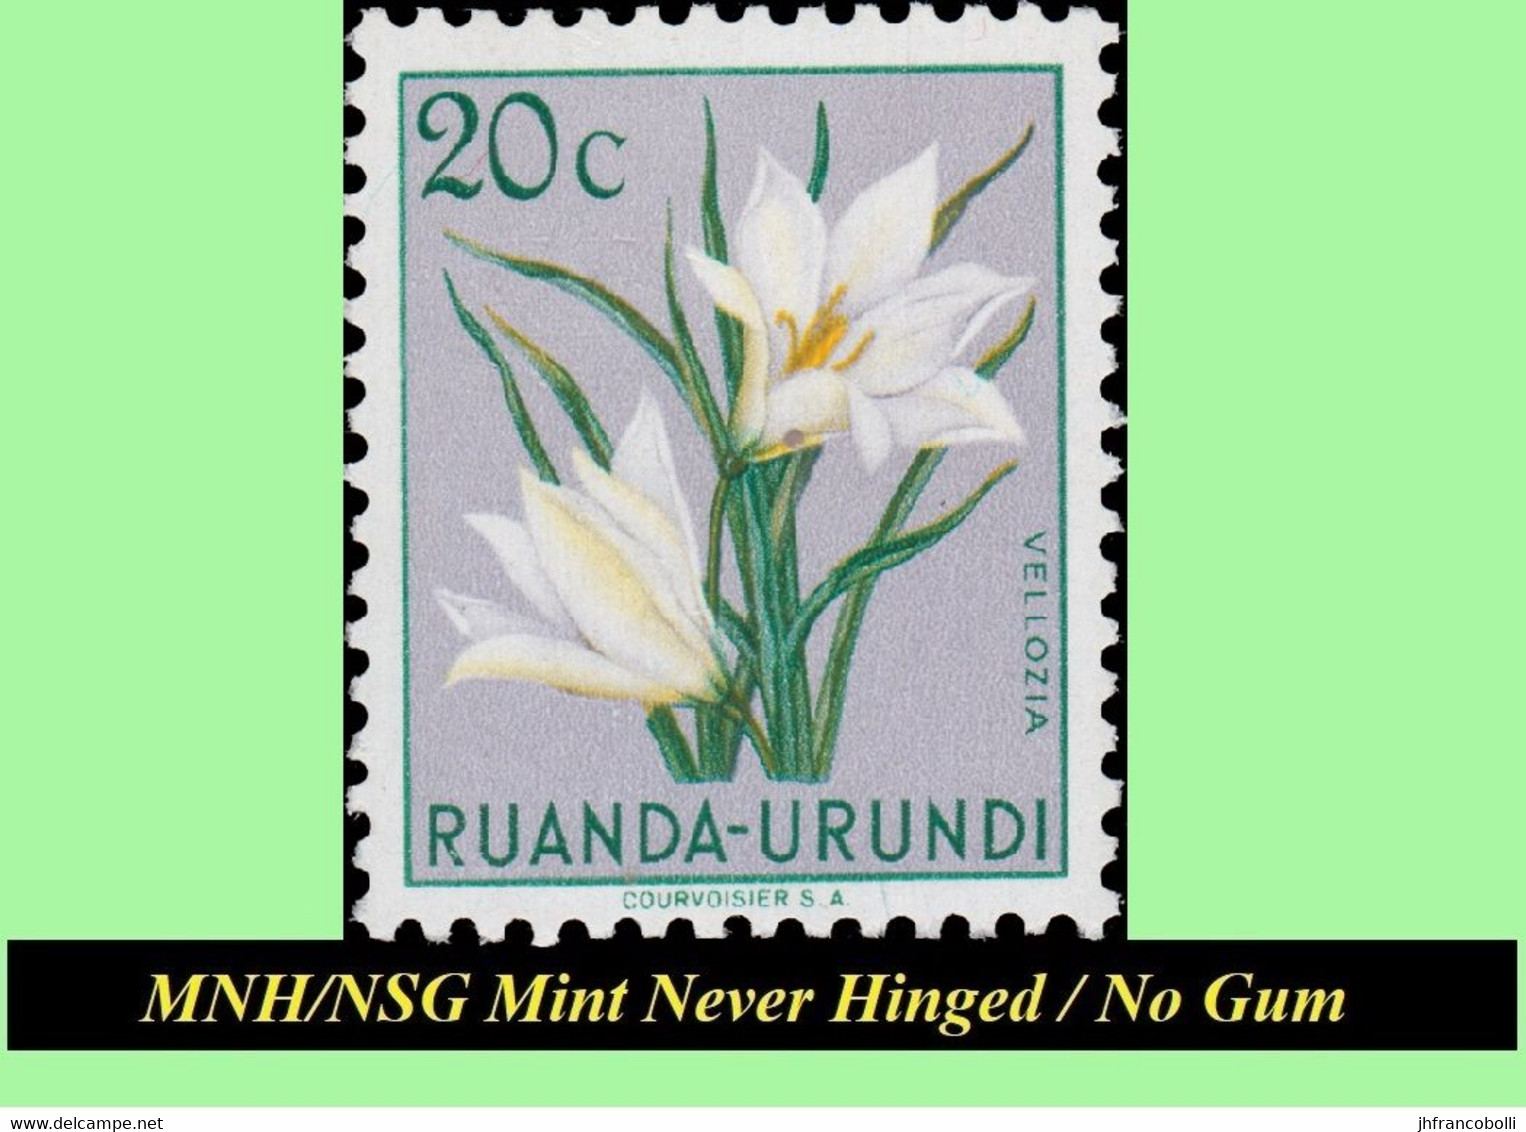 1953 ** RUANDA-URUNDI RU 177/195 MNH/NSG TROPICAL FLOWERS SET  ( x 19 stamps ) [ NO GUM ]